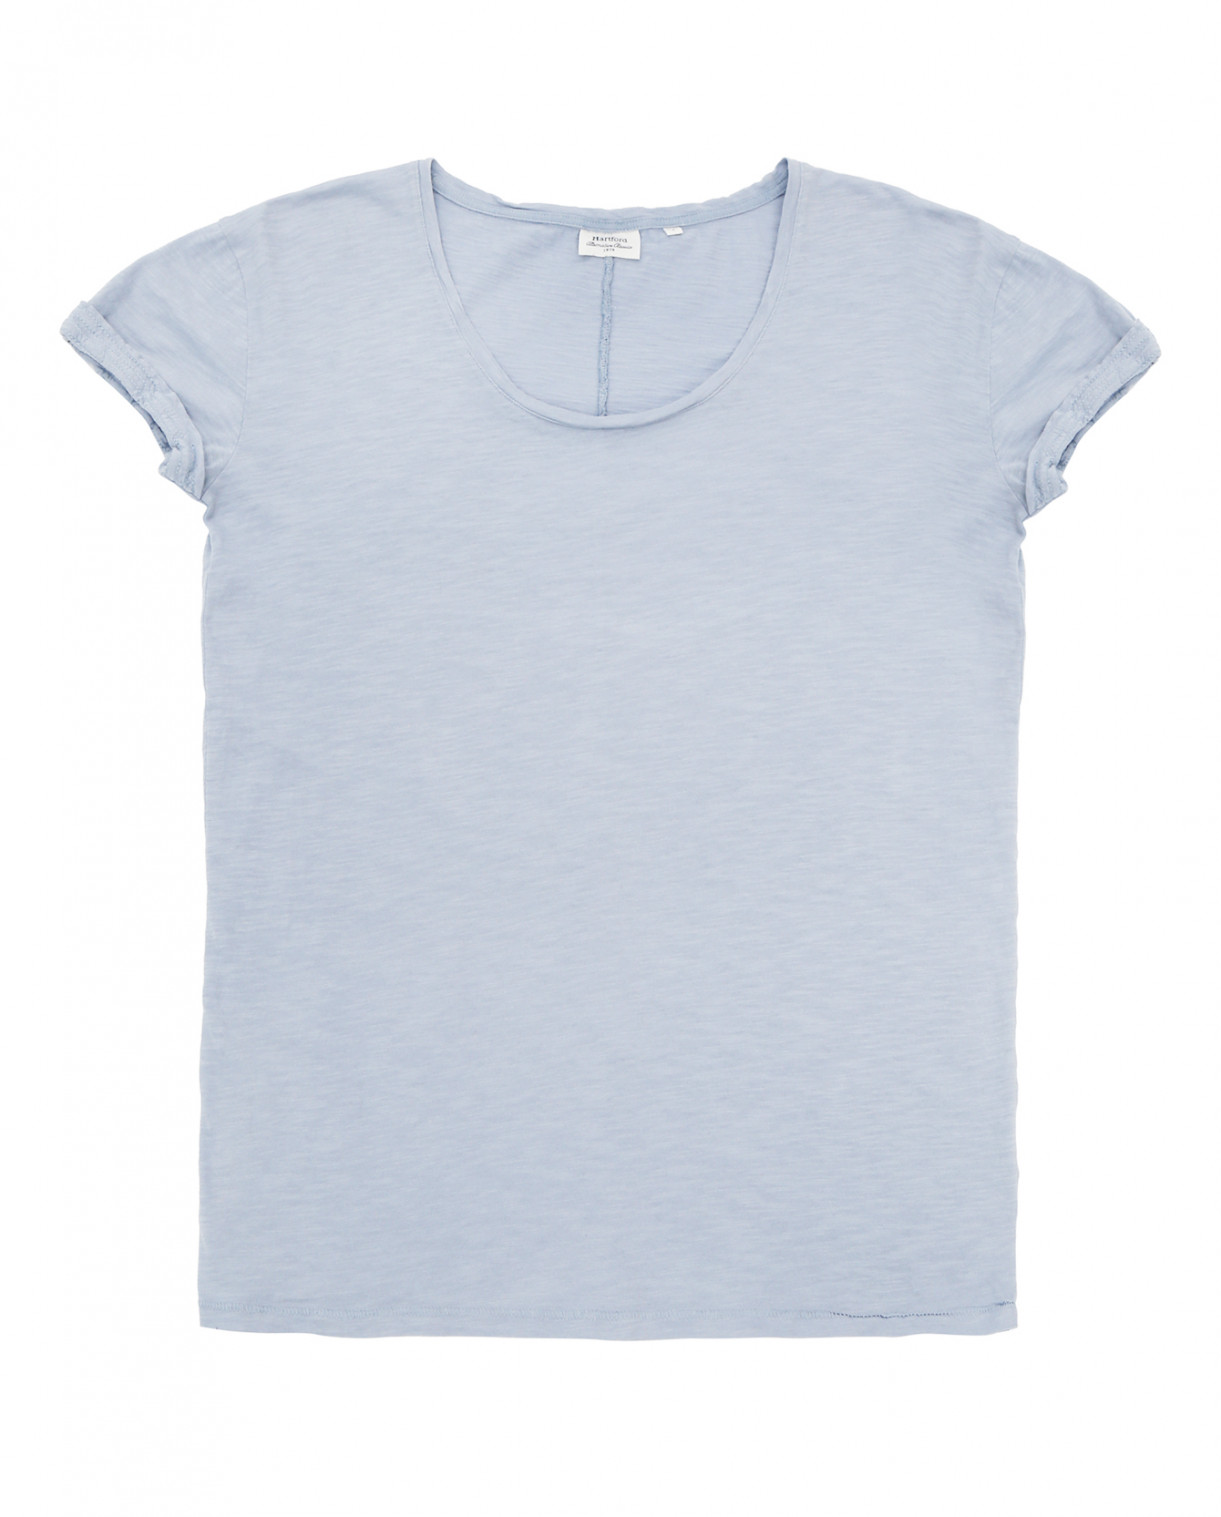 Хлопковая футболка с короткими рукавами Hartford  –  Общий вид  – Цвет:  Синий